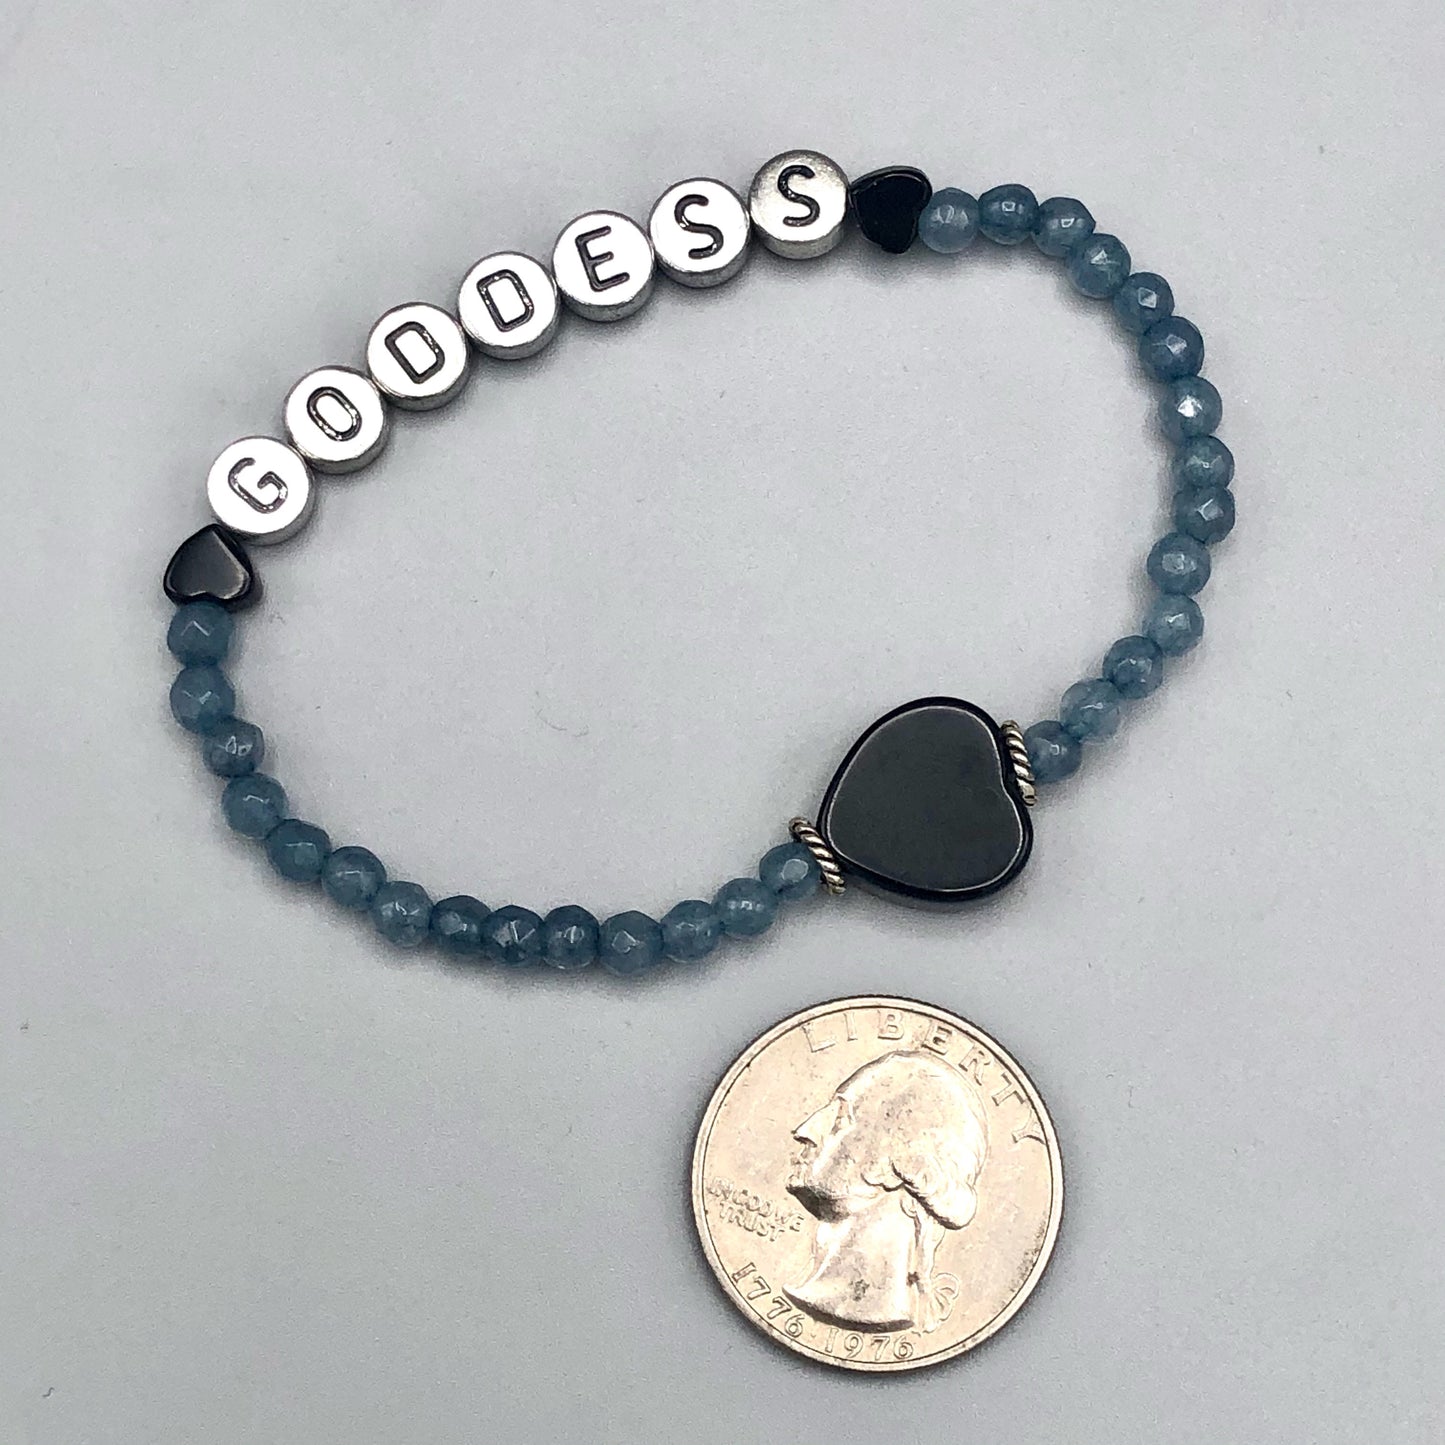 Blue Jade “GODDESS” with Onyx Gemstone Heart and Sterling Silver Stretch Bracelet